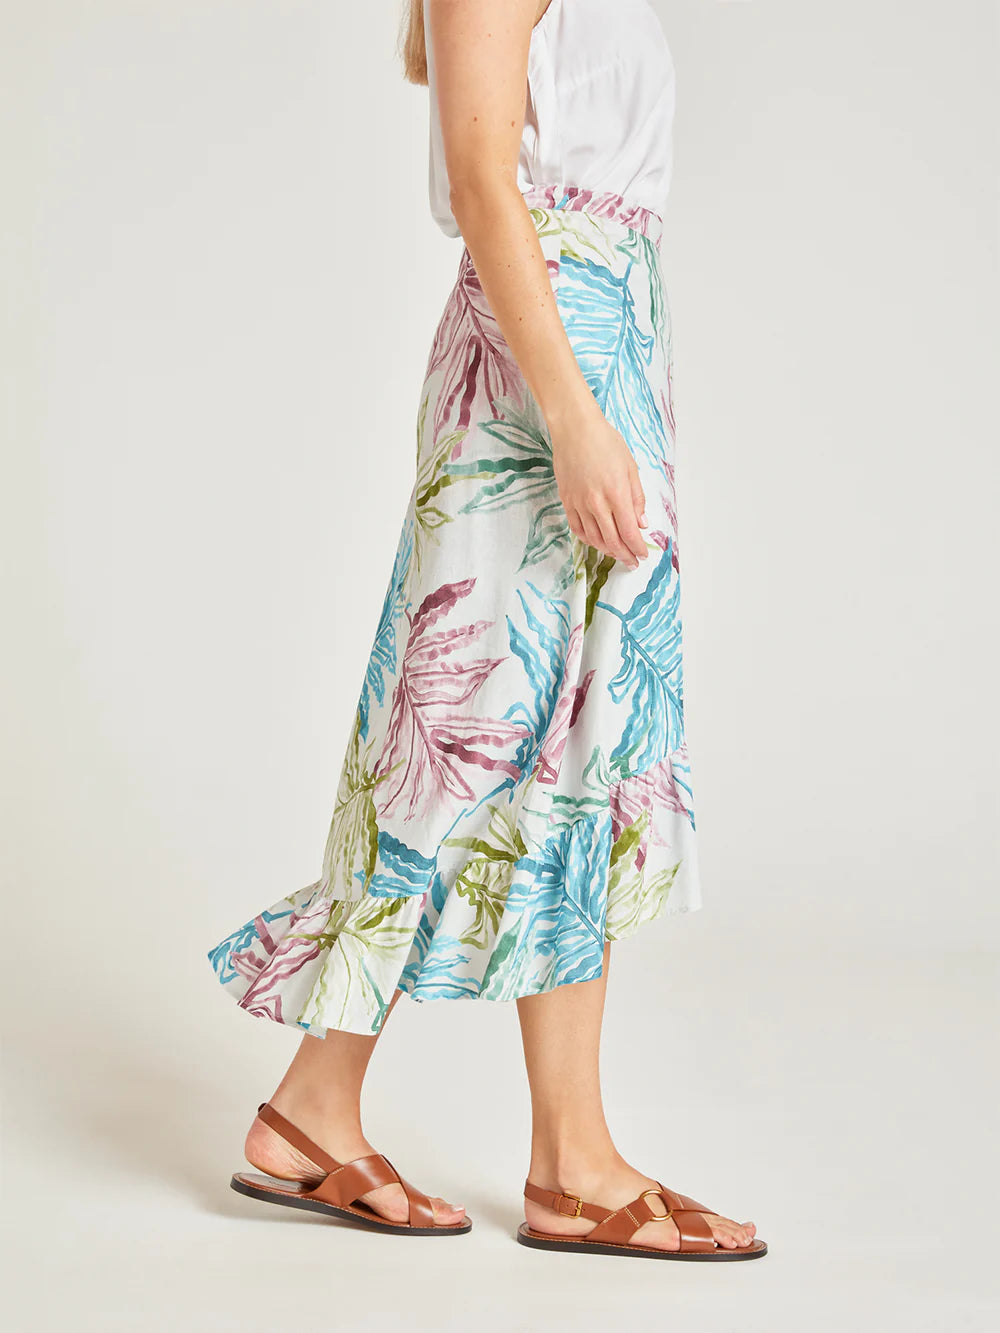 Leaf Print Hemp Skirt